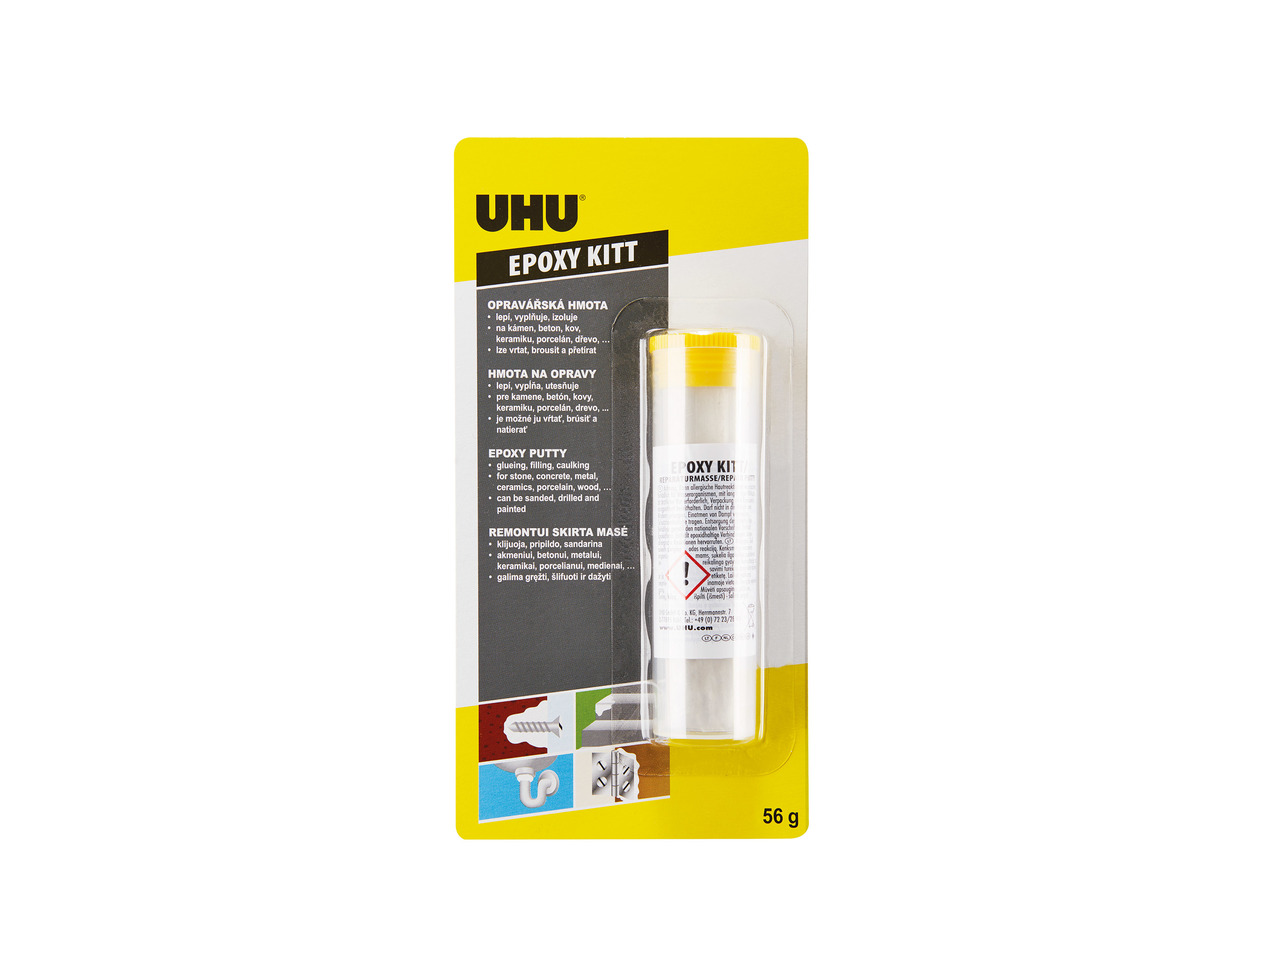 UHU Epoxy Repair Kit, Minis or Quick Epoxy Adhesive1